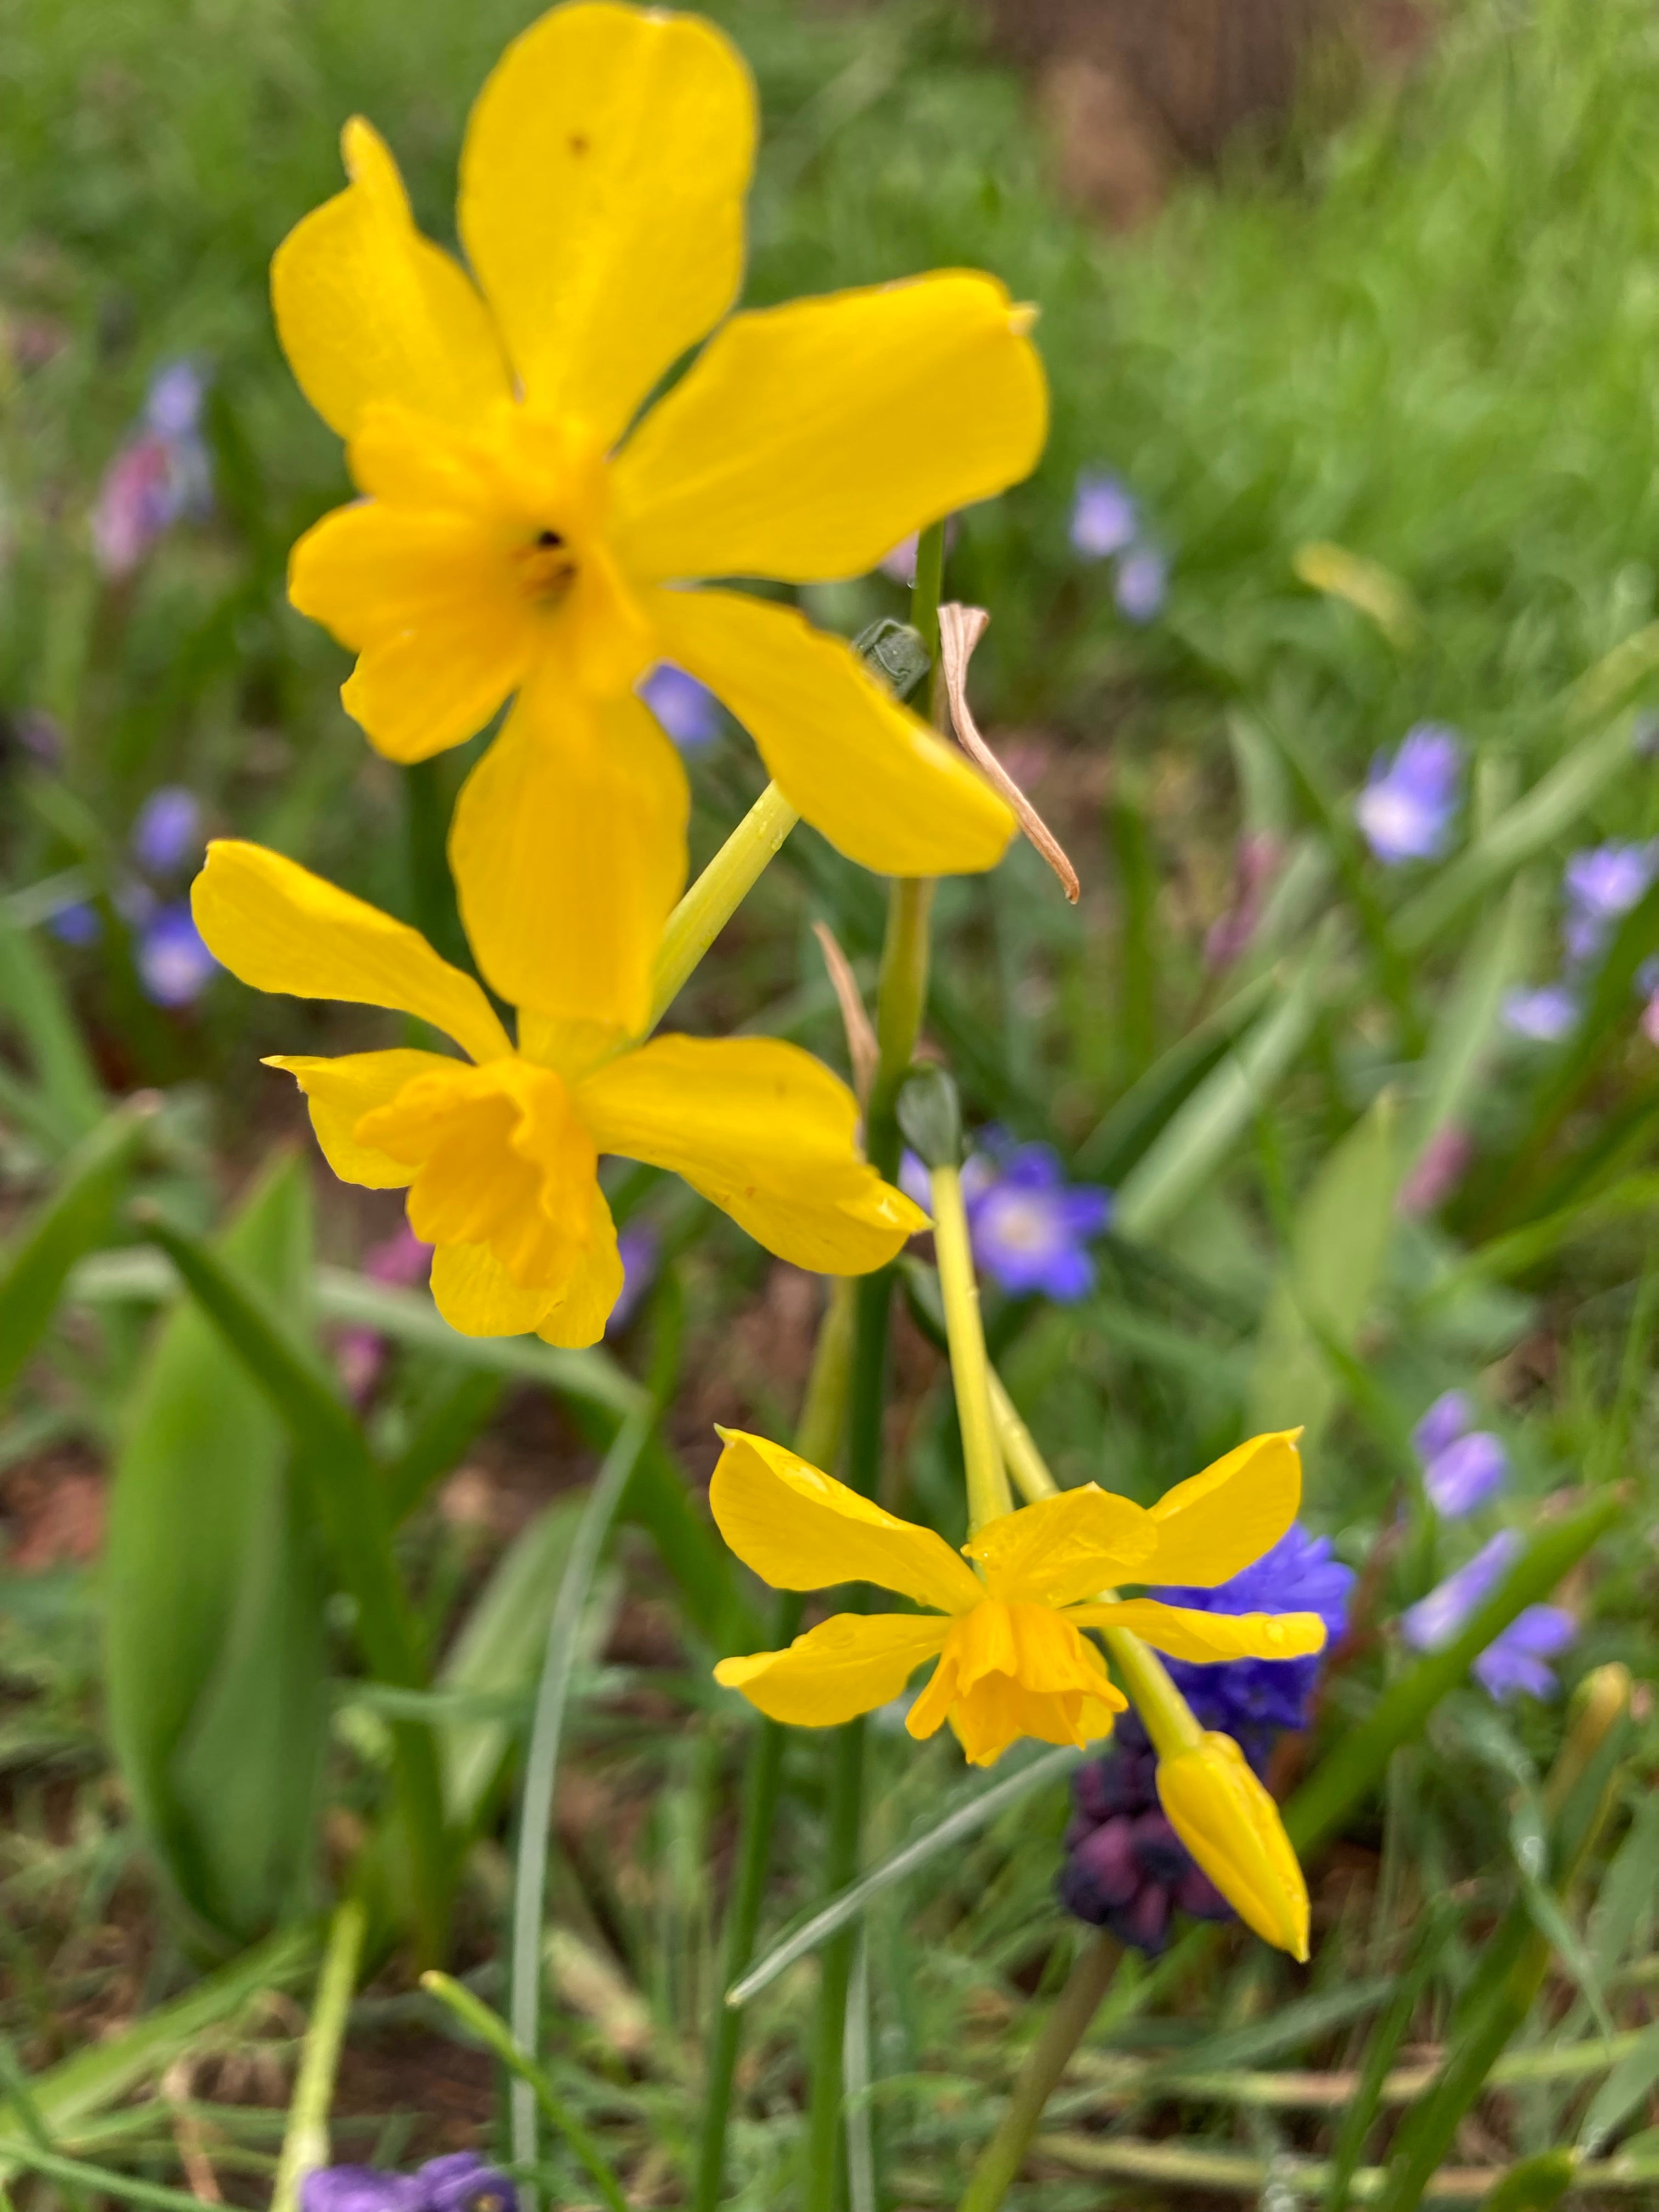 Twenty Daffodil Bulbs 'Baby Moon' (Narcissus) Free UK Postage